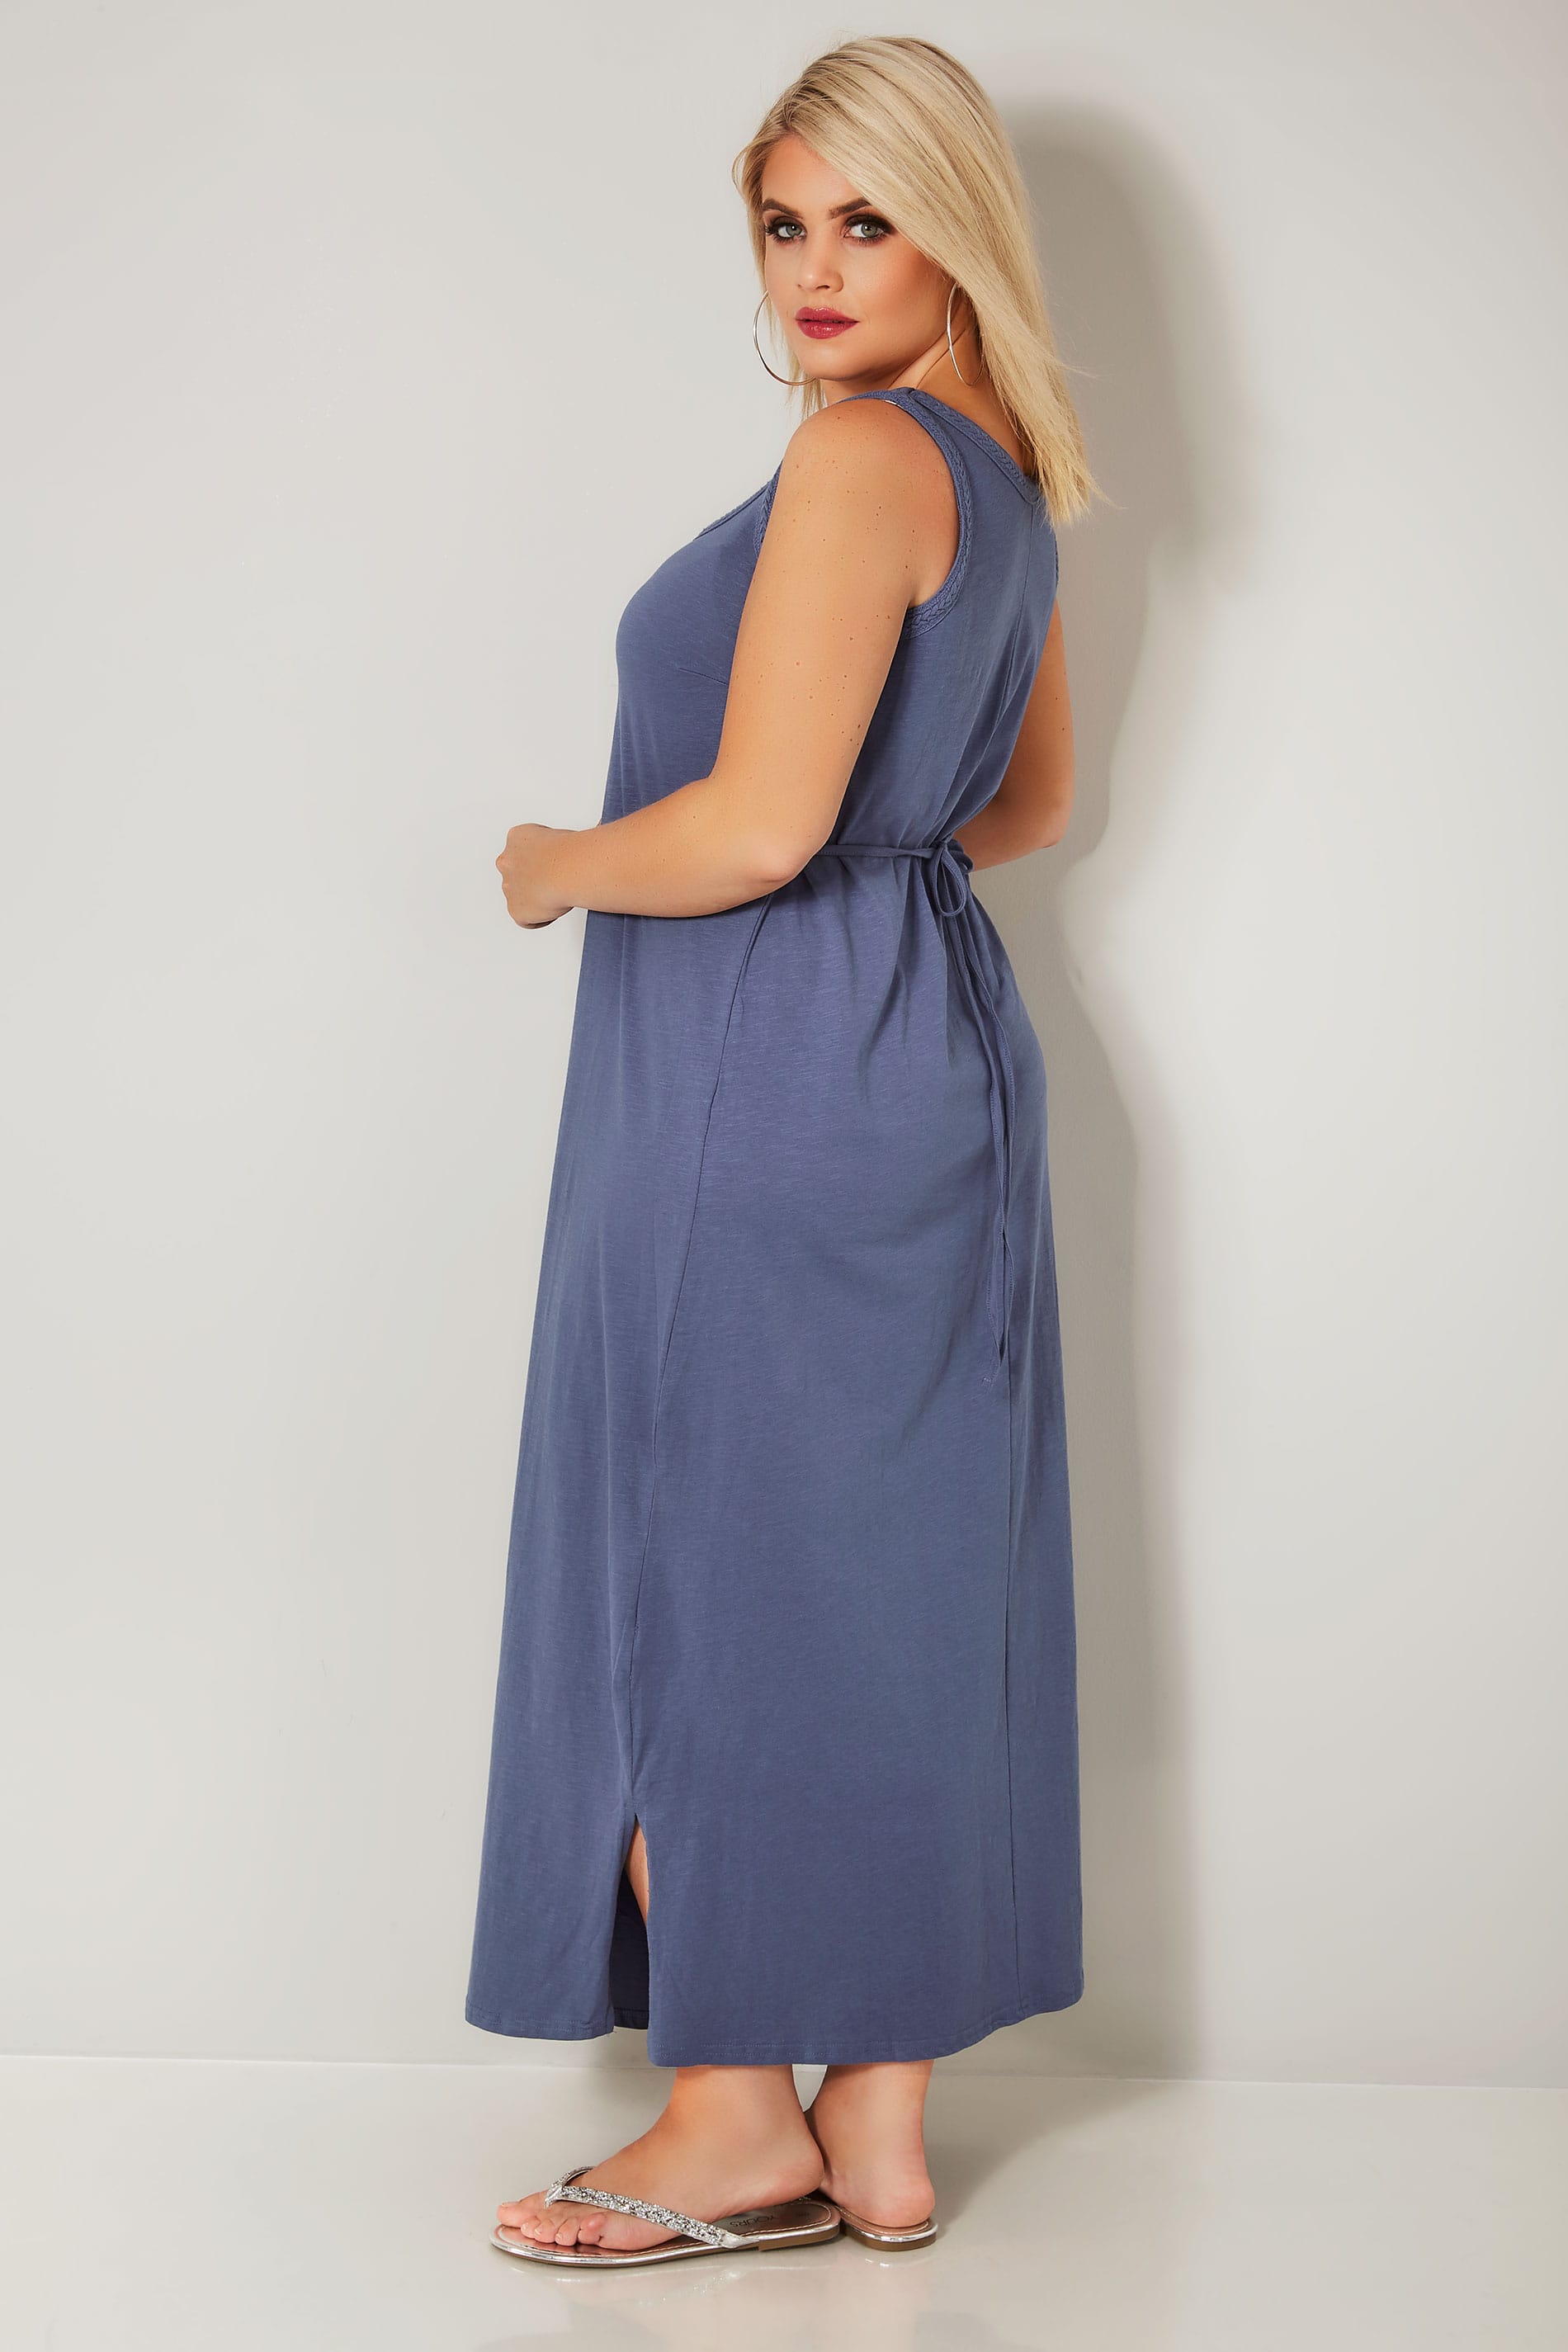 Blue Chambray Sleeveless Maxi Dress With Plait Trim, Plus size 16 to 36